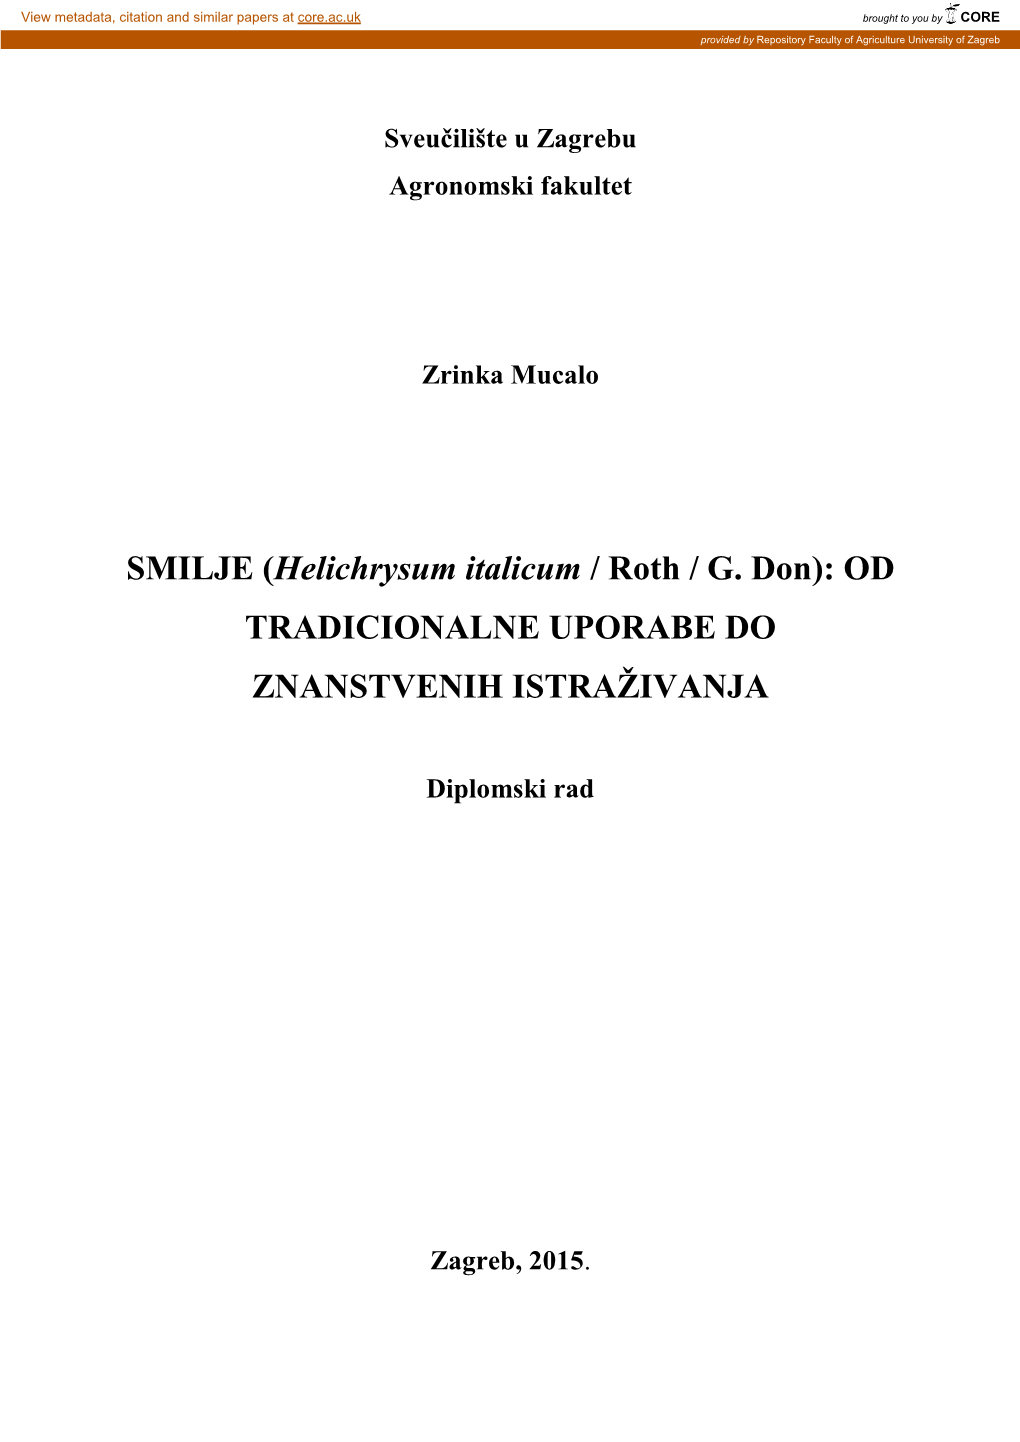 SMILJE (Helichrysum Italicum / Roth / G. Don): OD TRADICIONALNE UPORABE DO